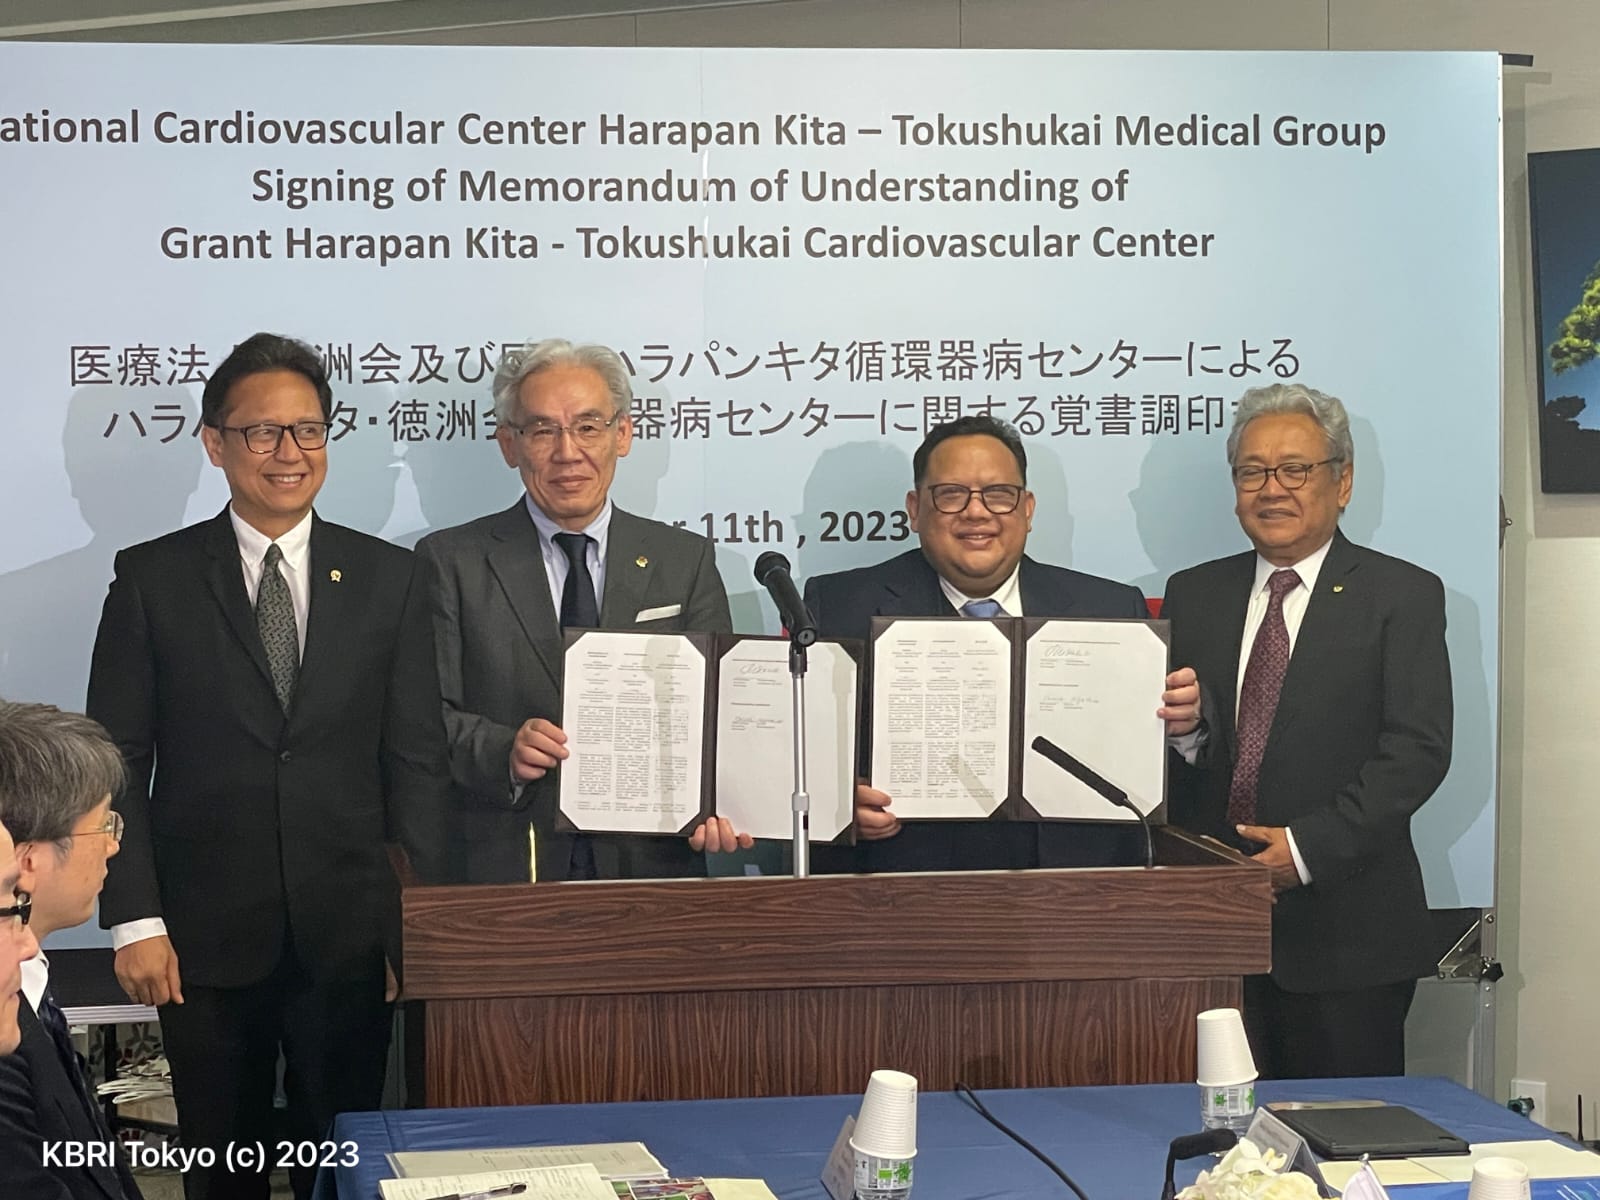 RI-Jepang Perluas Layanan Kardiovaskular di RS Jantung Harapan Kita